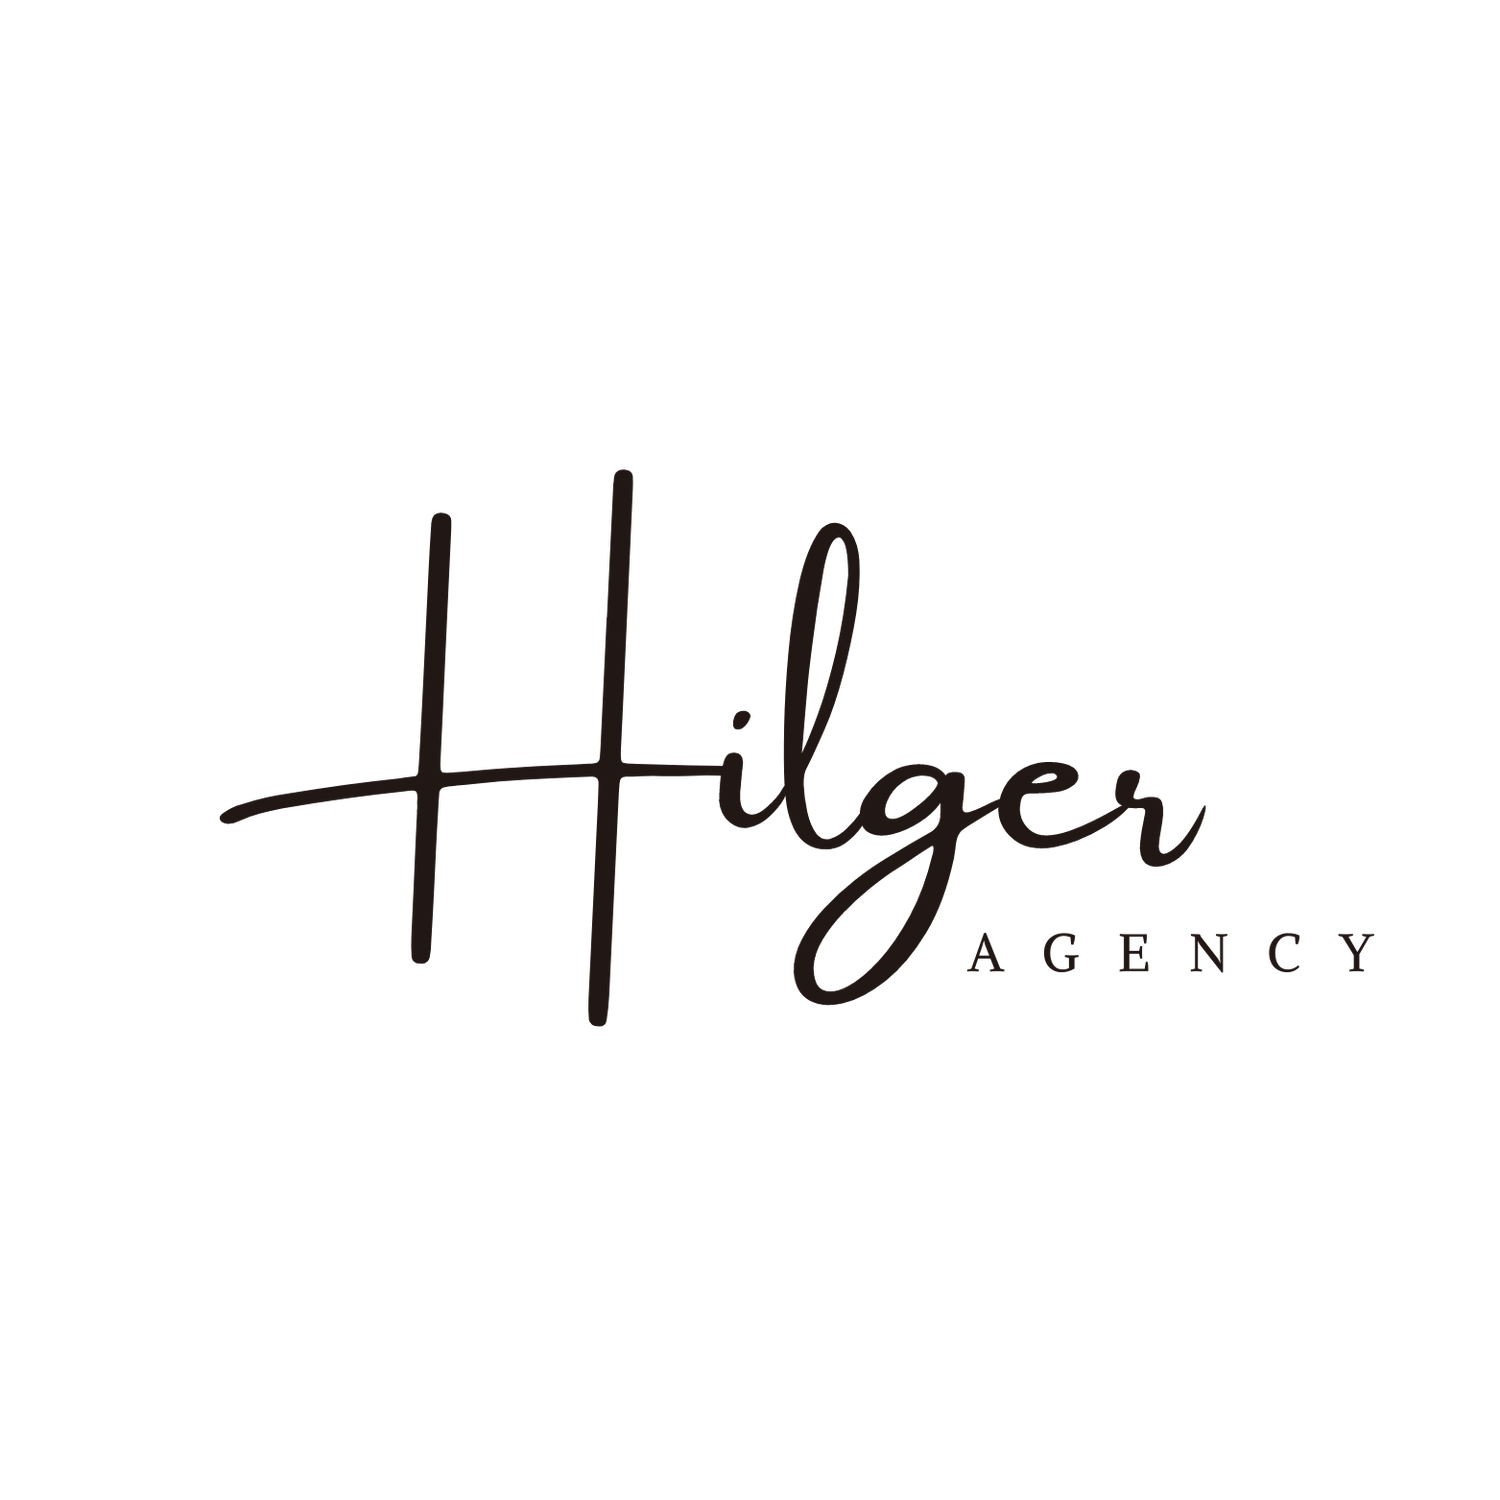 HILGER AGENCY